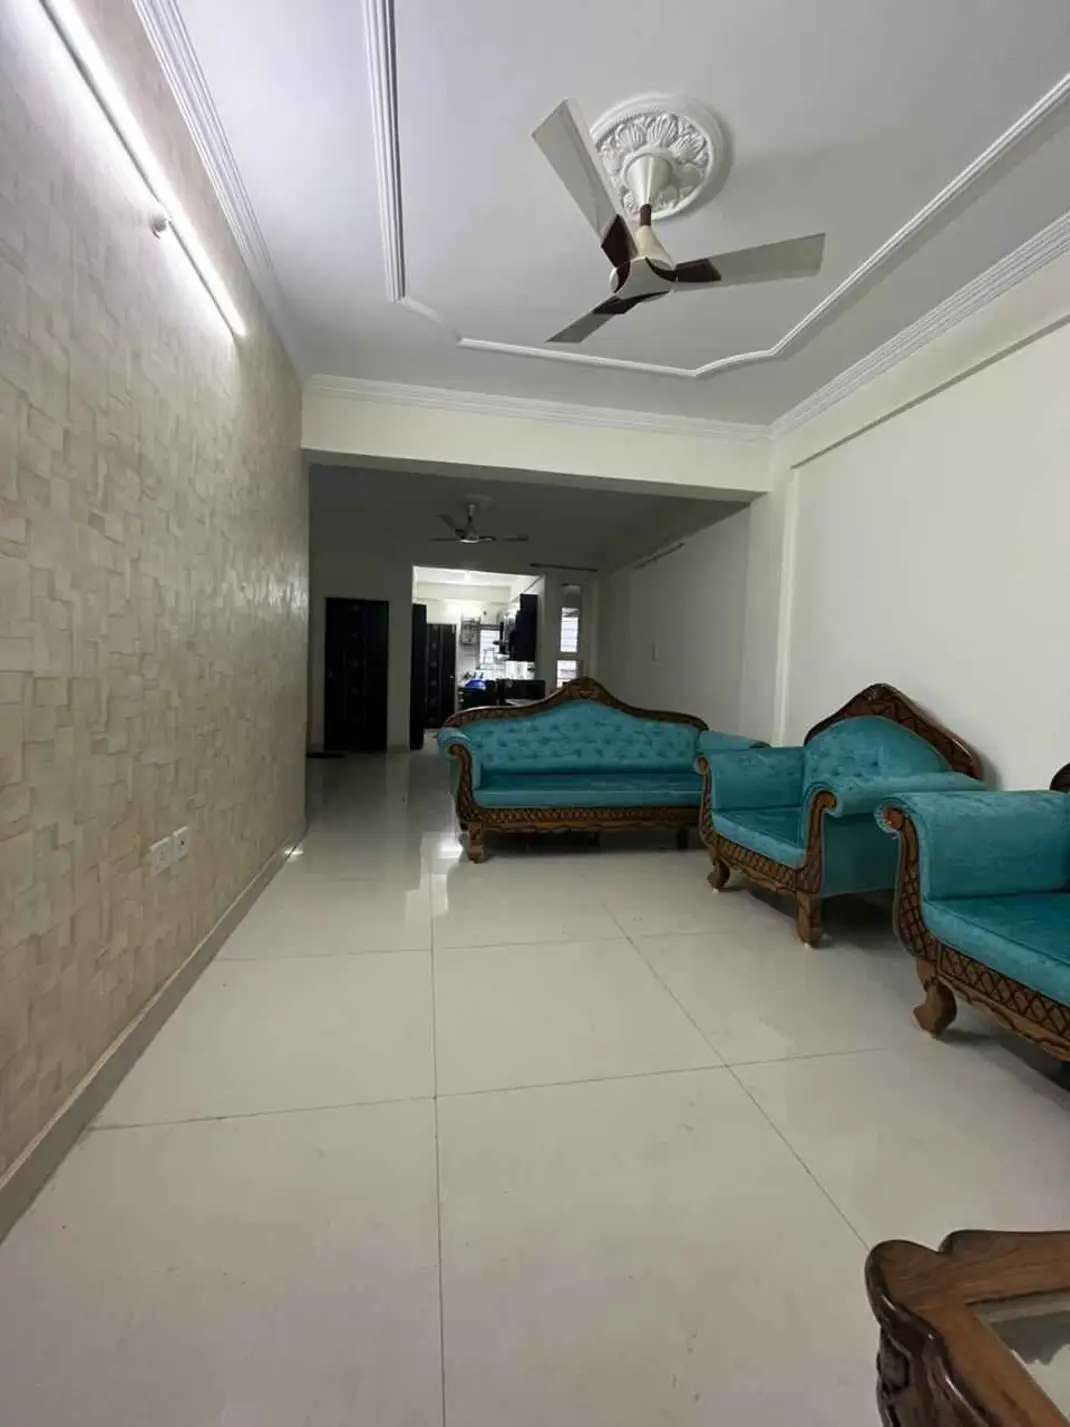 2 Bed/ 2 Bath Rent Apartment/ Flat; 1,200 sq. ft. carpet area, Furnished for rent @Hoshangabad road bhopal